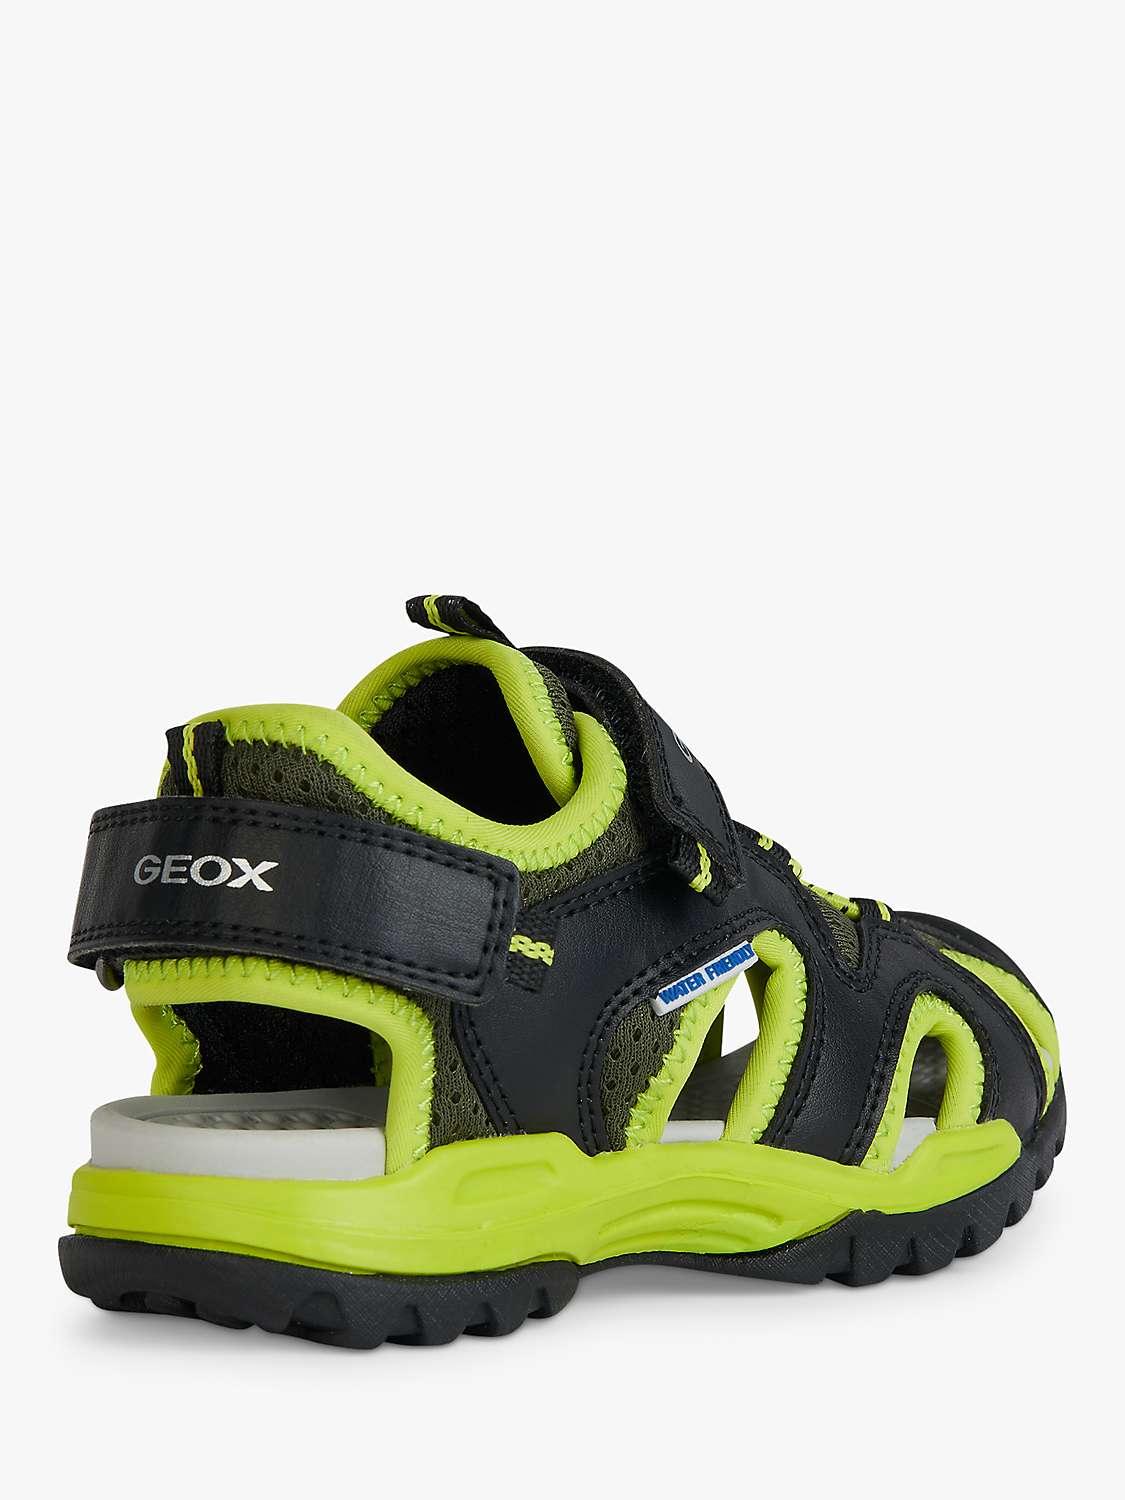 Buy Geox Borealis Closed Toe Sandals Online at johnlewis.com